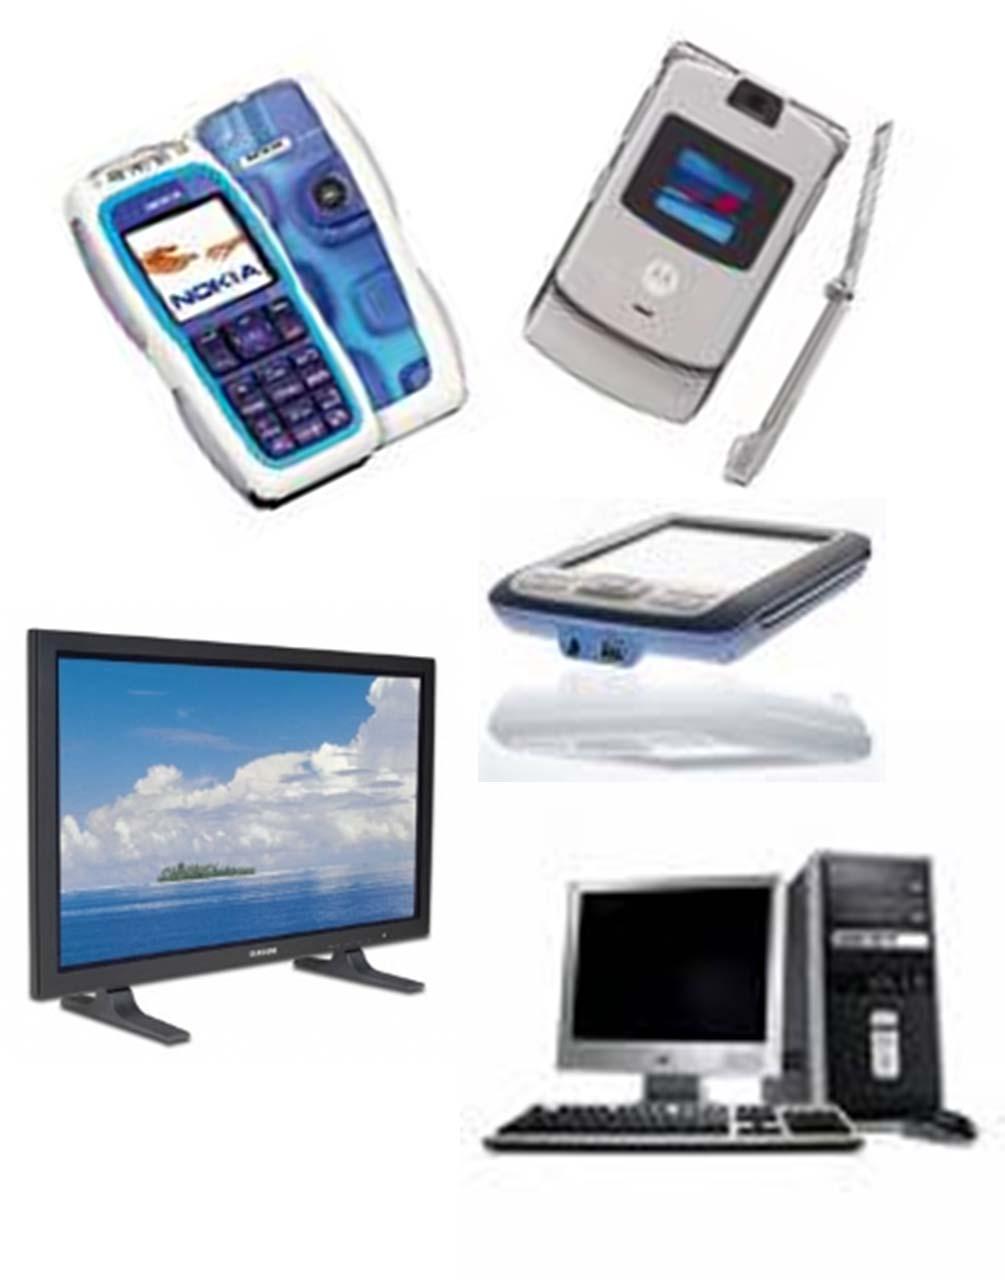 Electrónica: Principales productos de exportación Televisores con pantalla plana Teléfonos